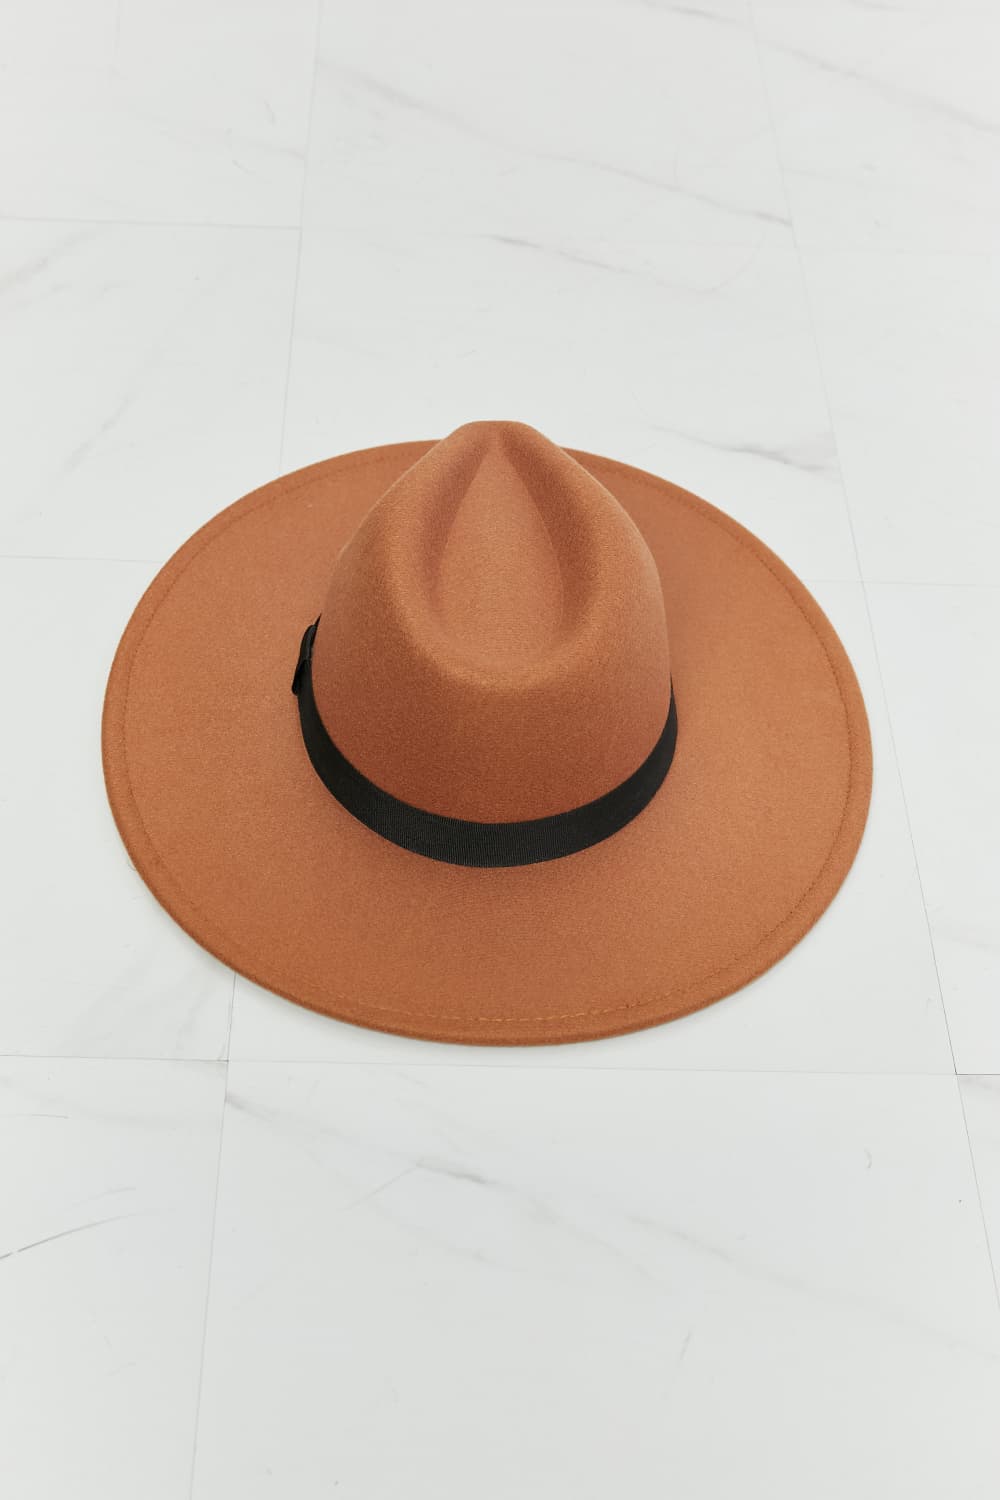 Fame Enjoy The Simple Things Fedora Hat - Tigbuls Variety Fashion